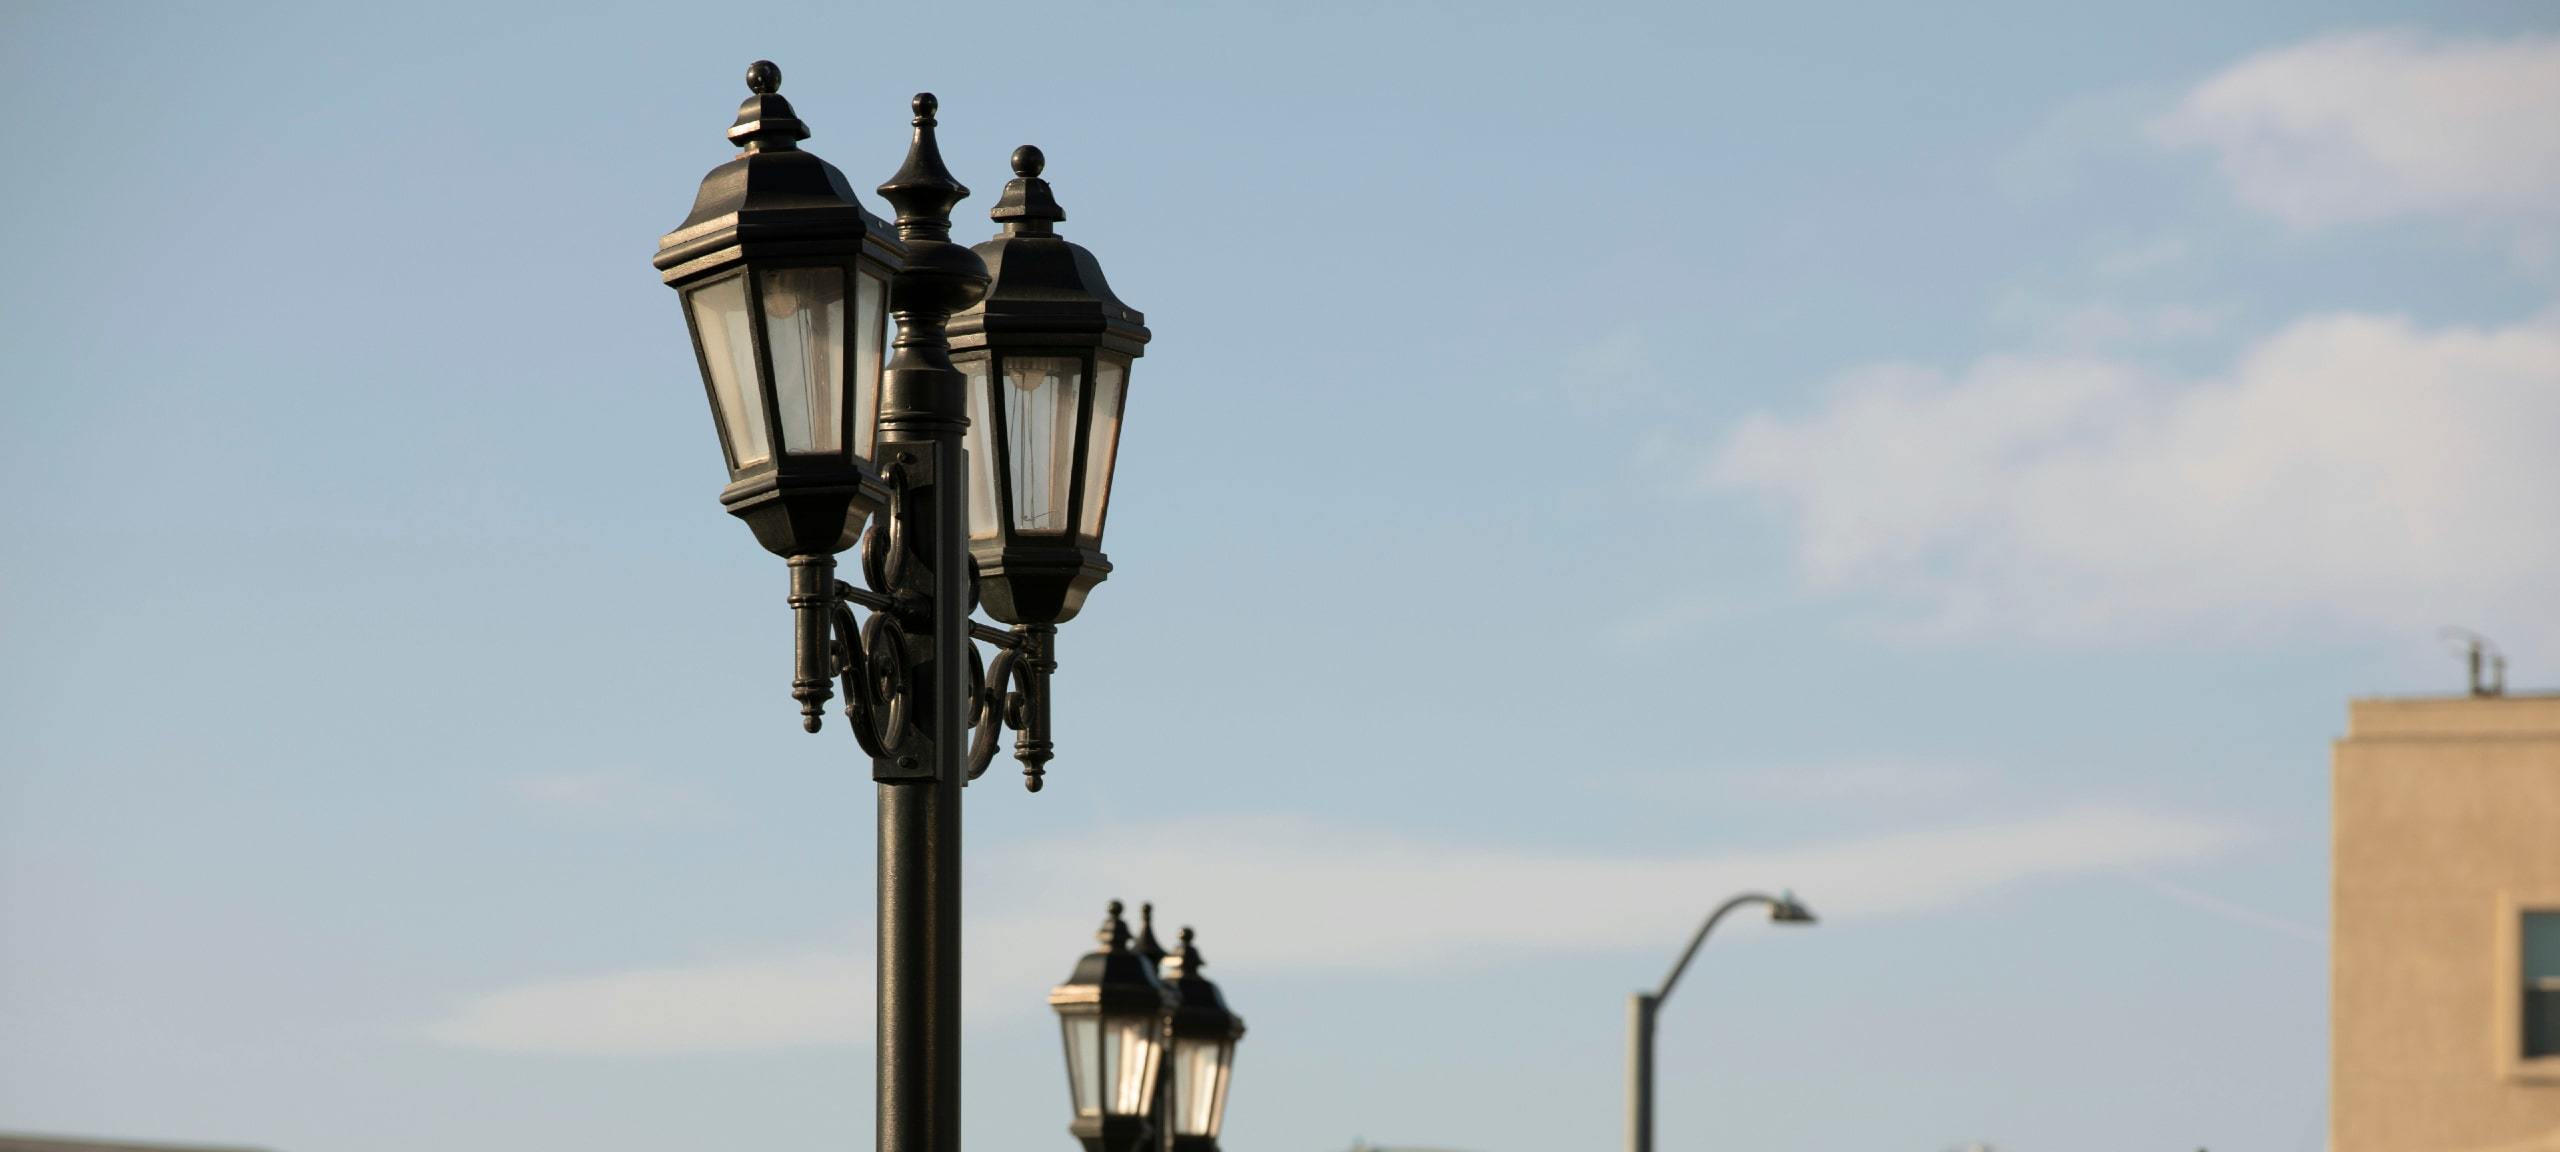 Historic lamppost in historic Santa Ana district